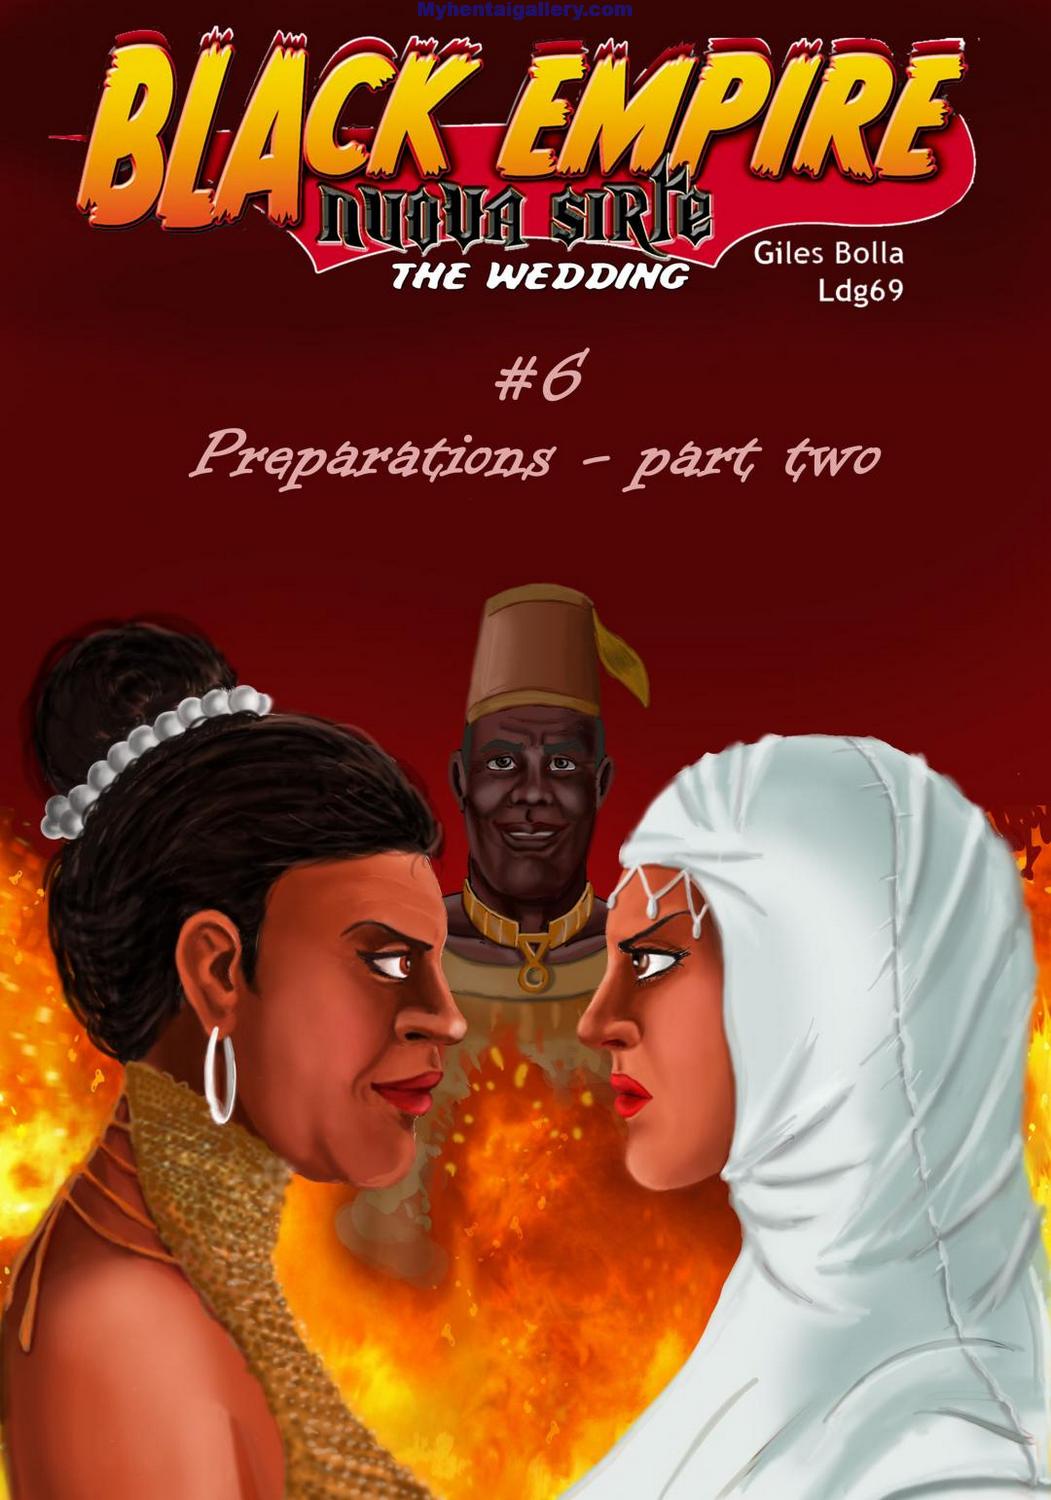 Black Empire New Sirte - The Wedding 6